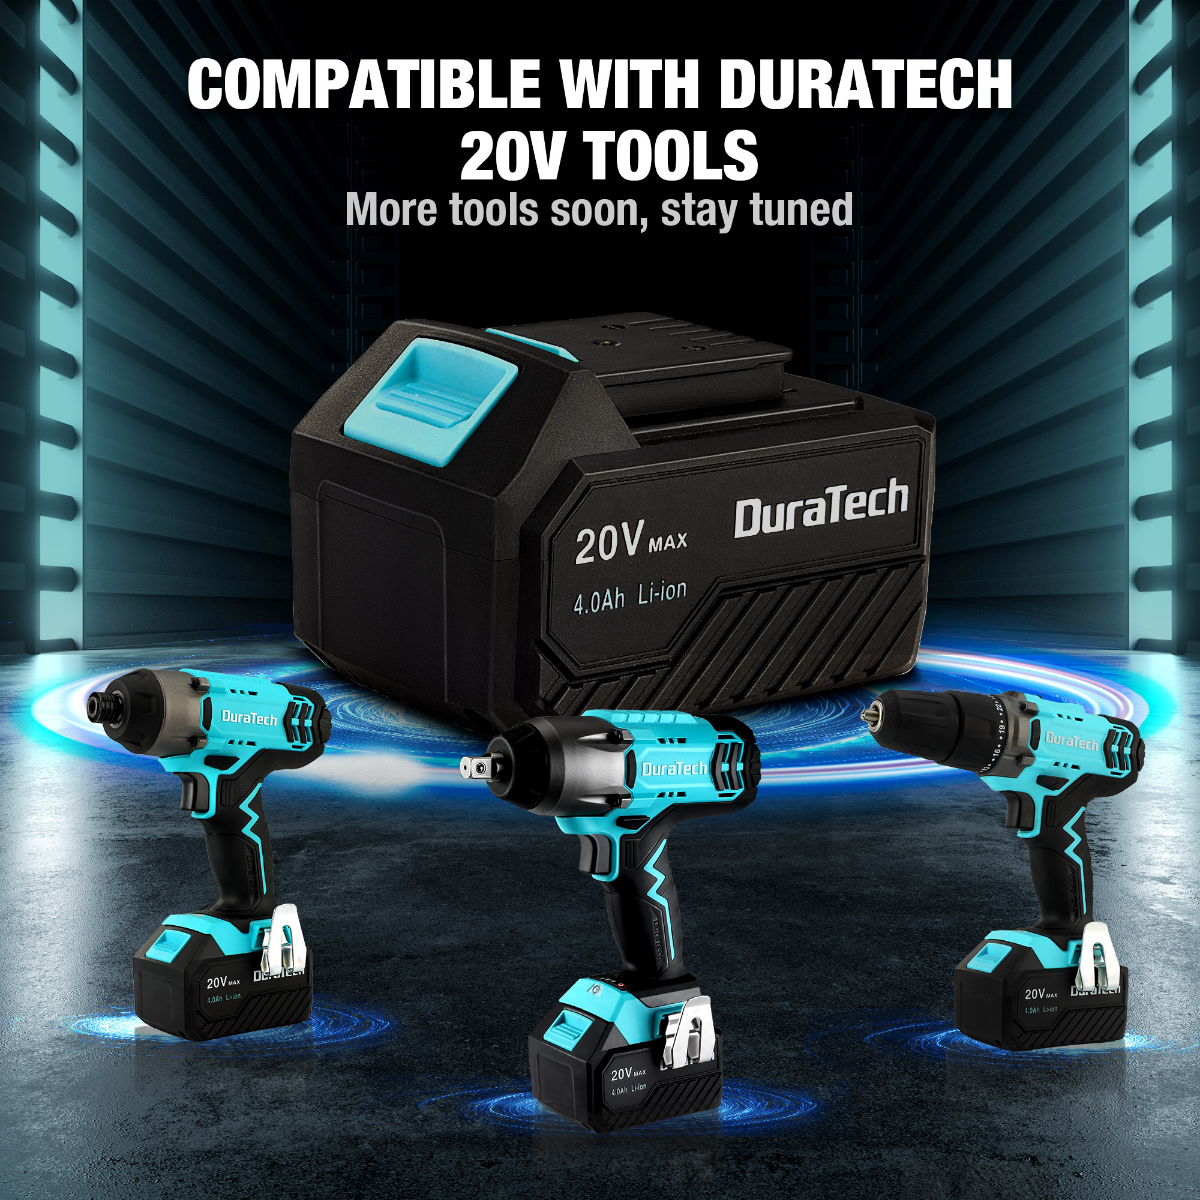 DURATECH 20V 4.0Ah Li-ion Battery Pack